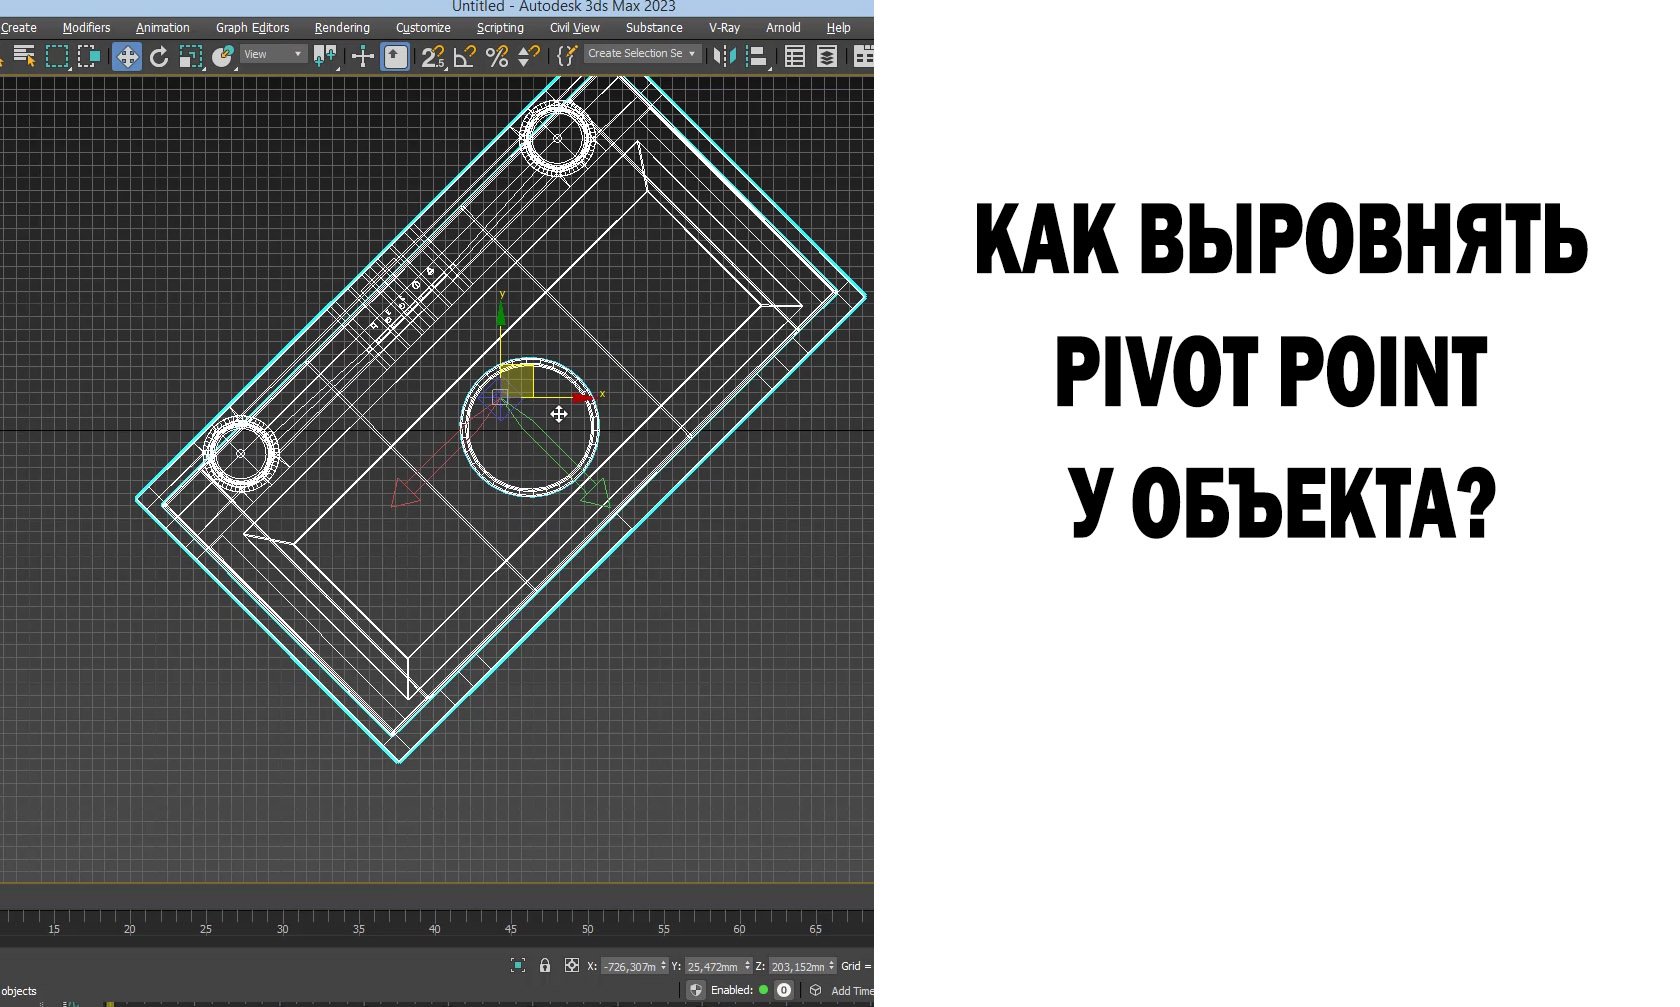 Pivot 3ds Max. Привязка точек в 3d Max. Как выровнять объект в 3d Max. Pivot point 3ds Max.